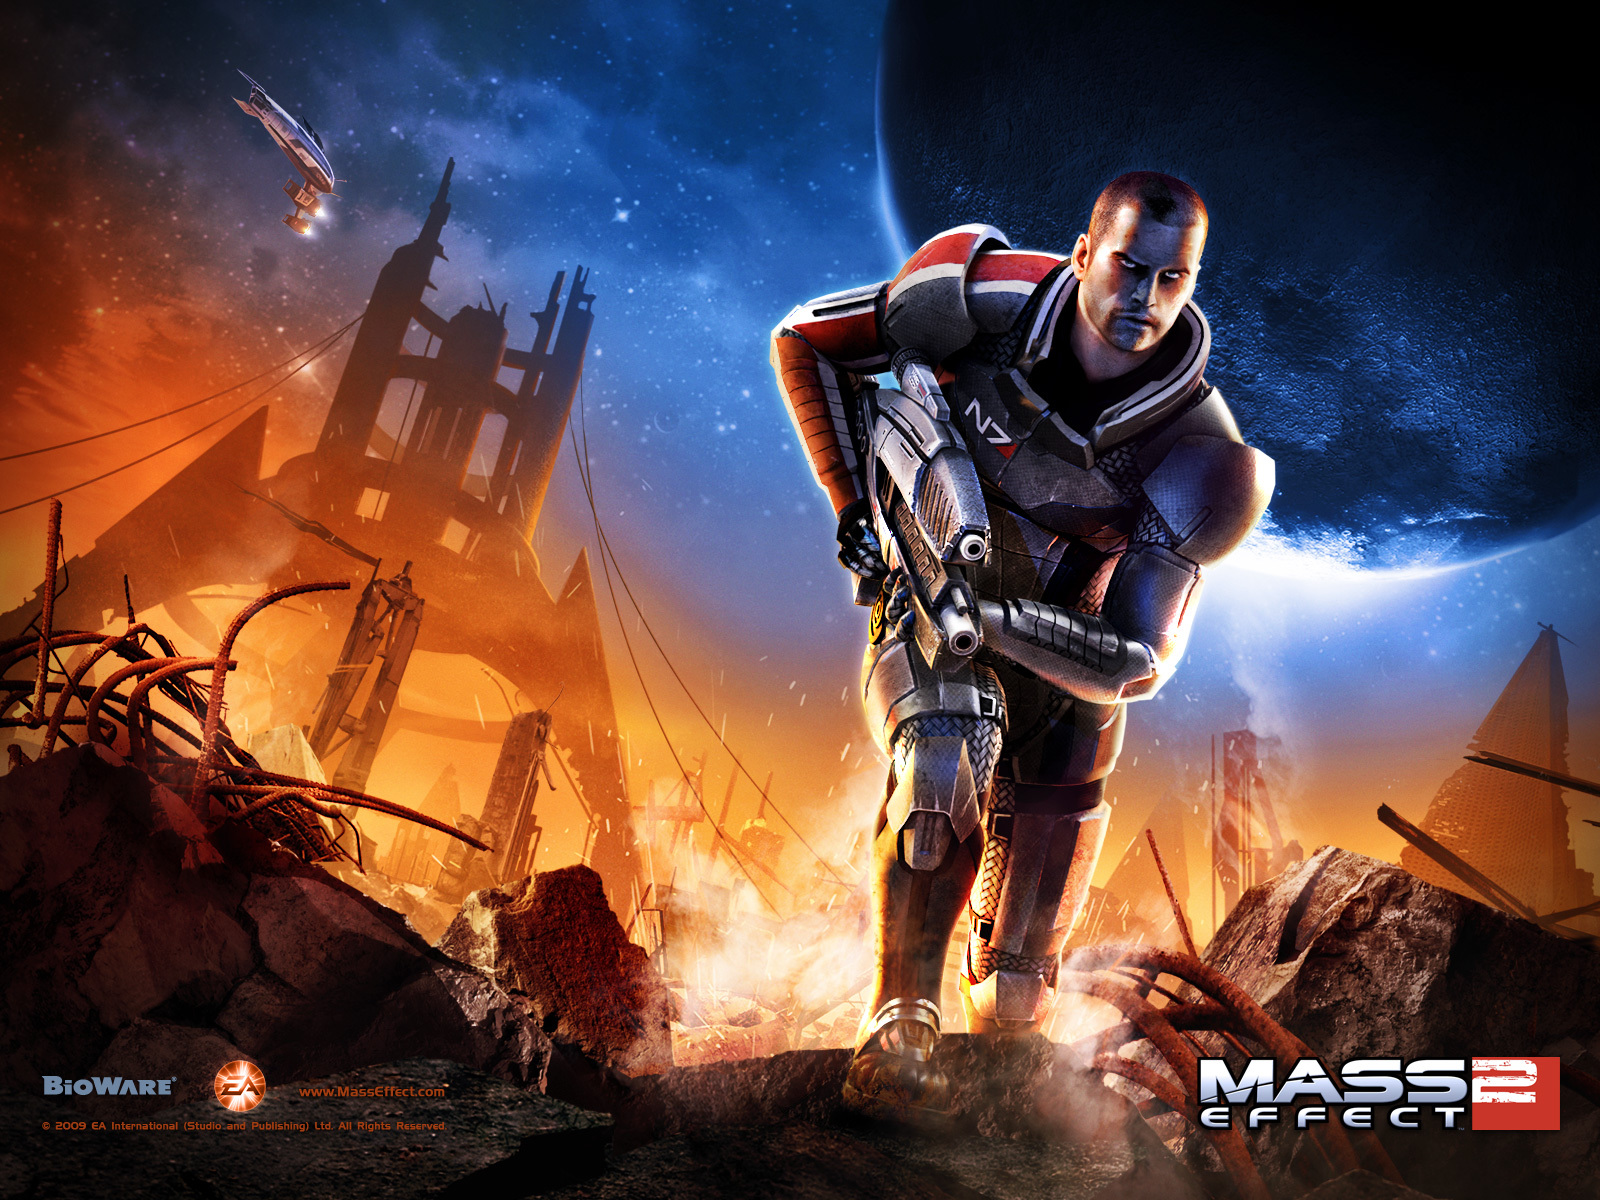 Descarga gratuita de fondo de pantalla para móvil de Personas, Hombres, Mass Effect, Juegos.